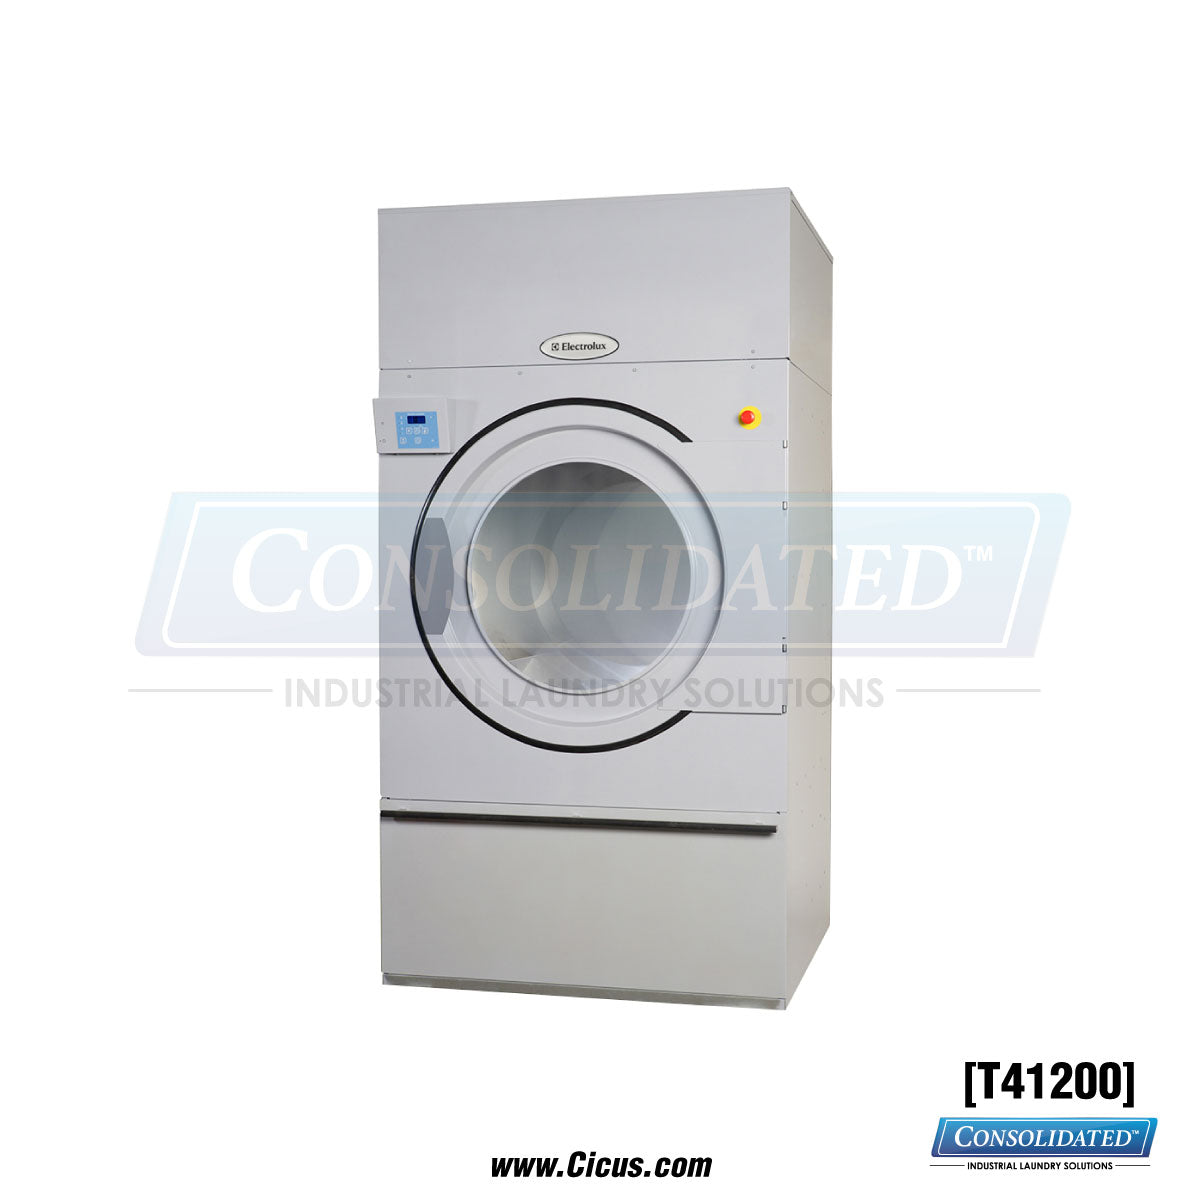 Electrolux Stacked/Single Pocket Dryer [T41200]